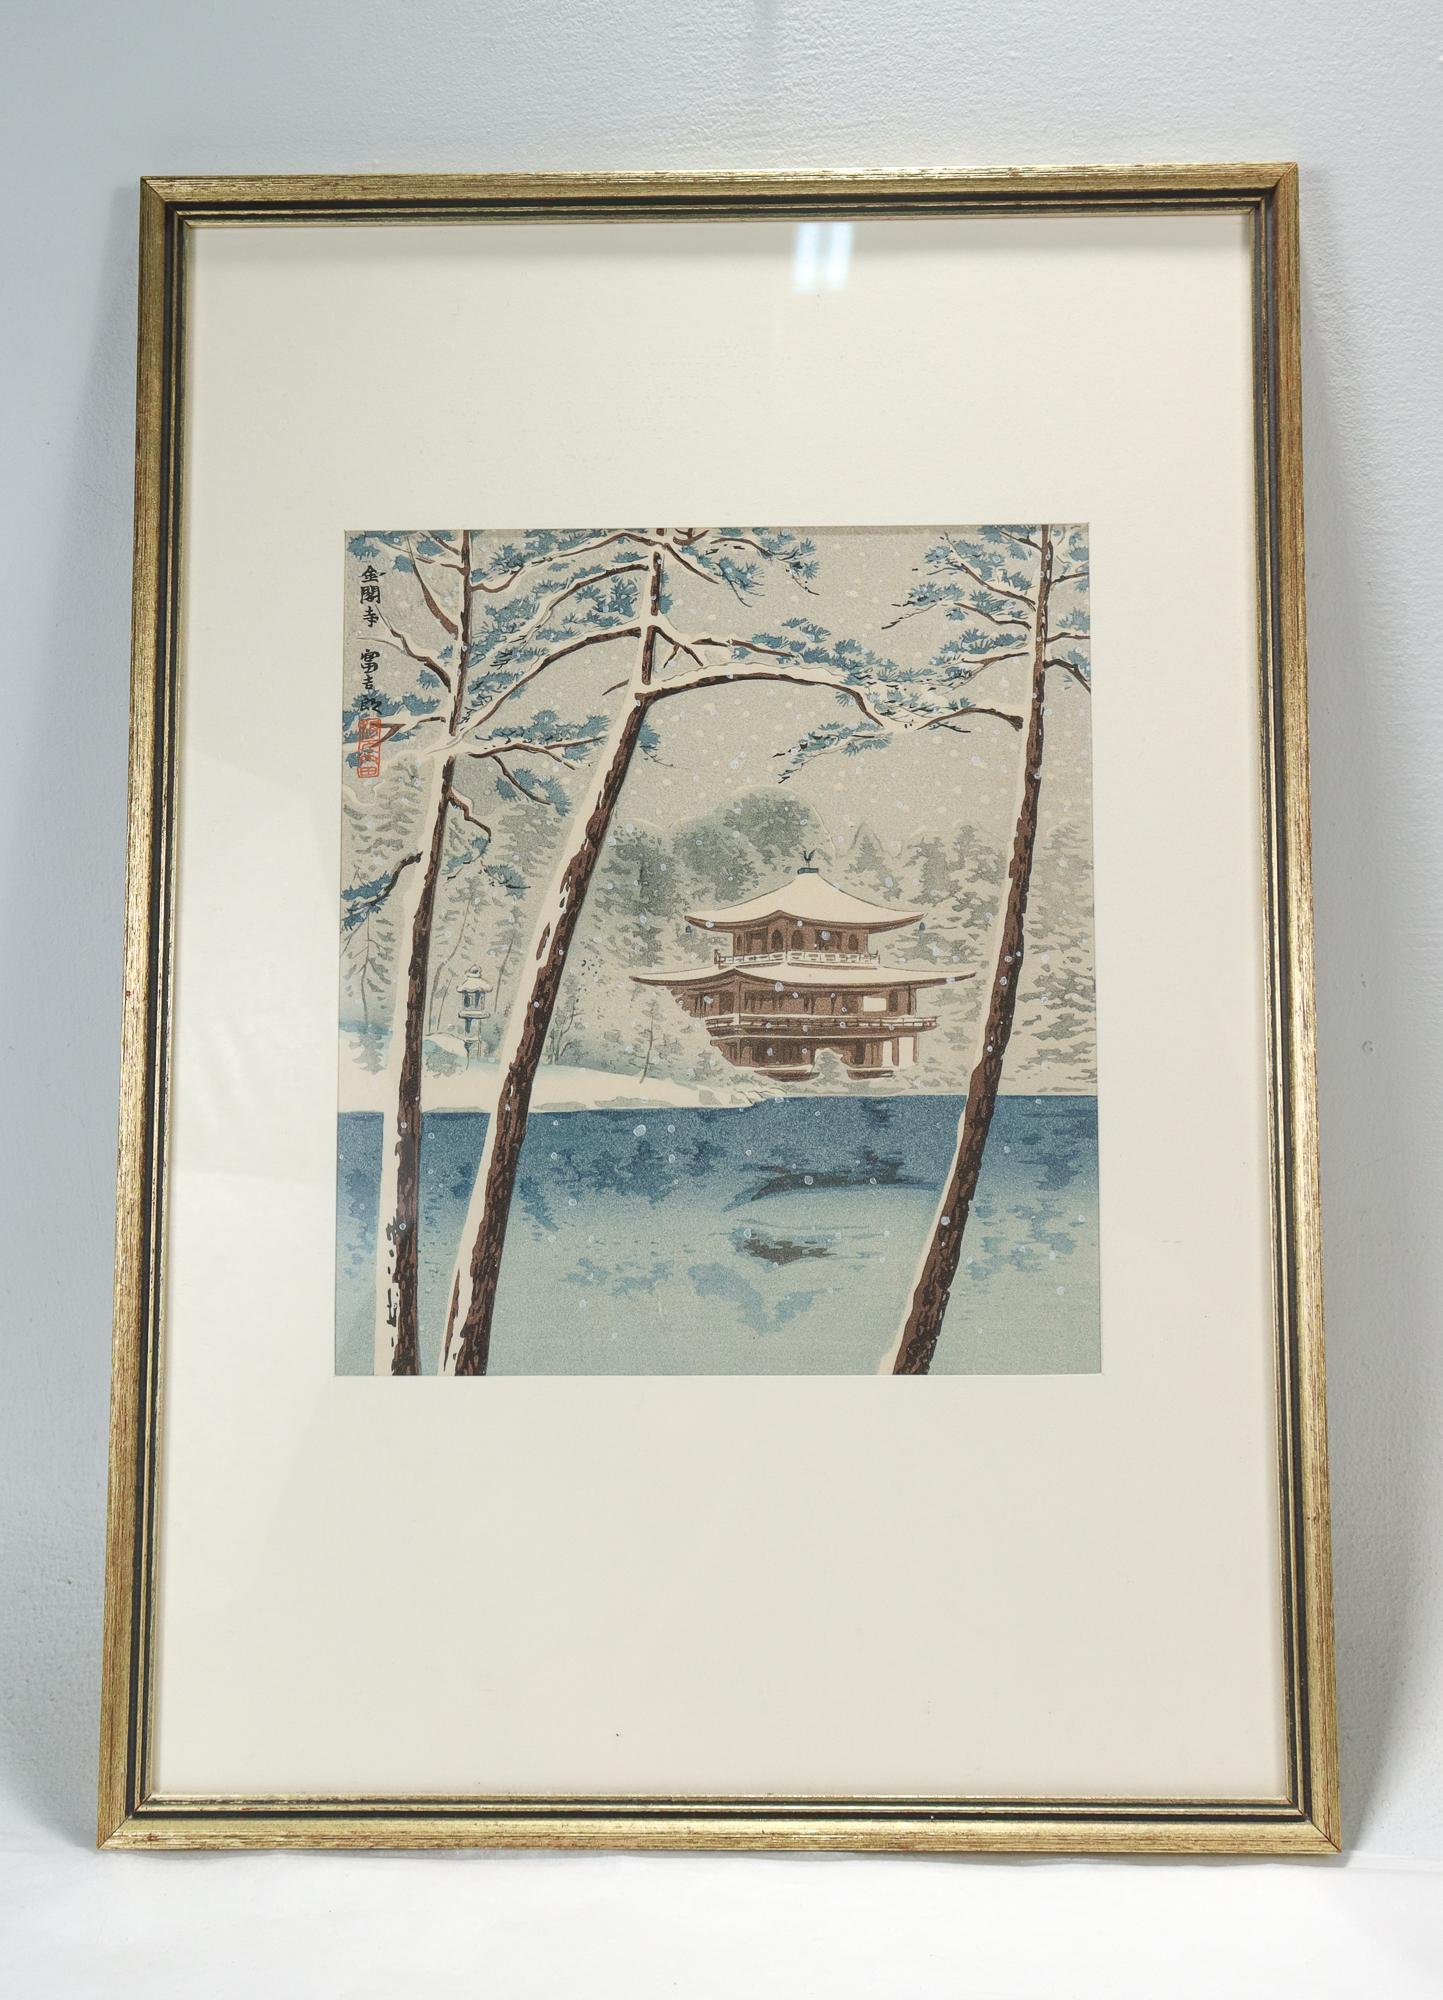 Showa Vintage Japanese Ukiyo-e Print of Kinkaku-ji in Snow by Tokuriki Tomikichiro For Sale